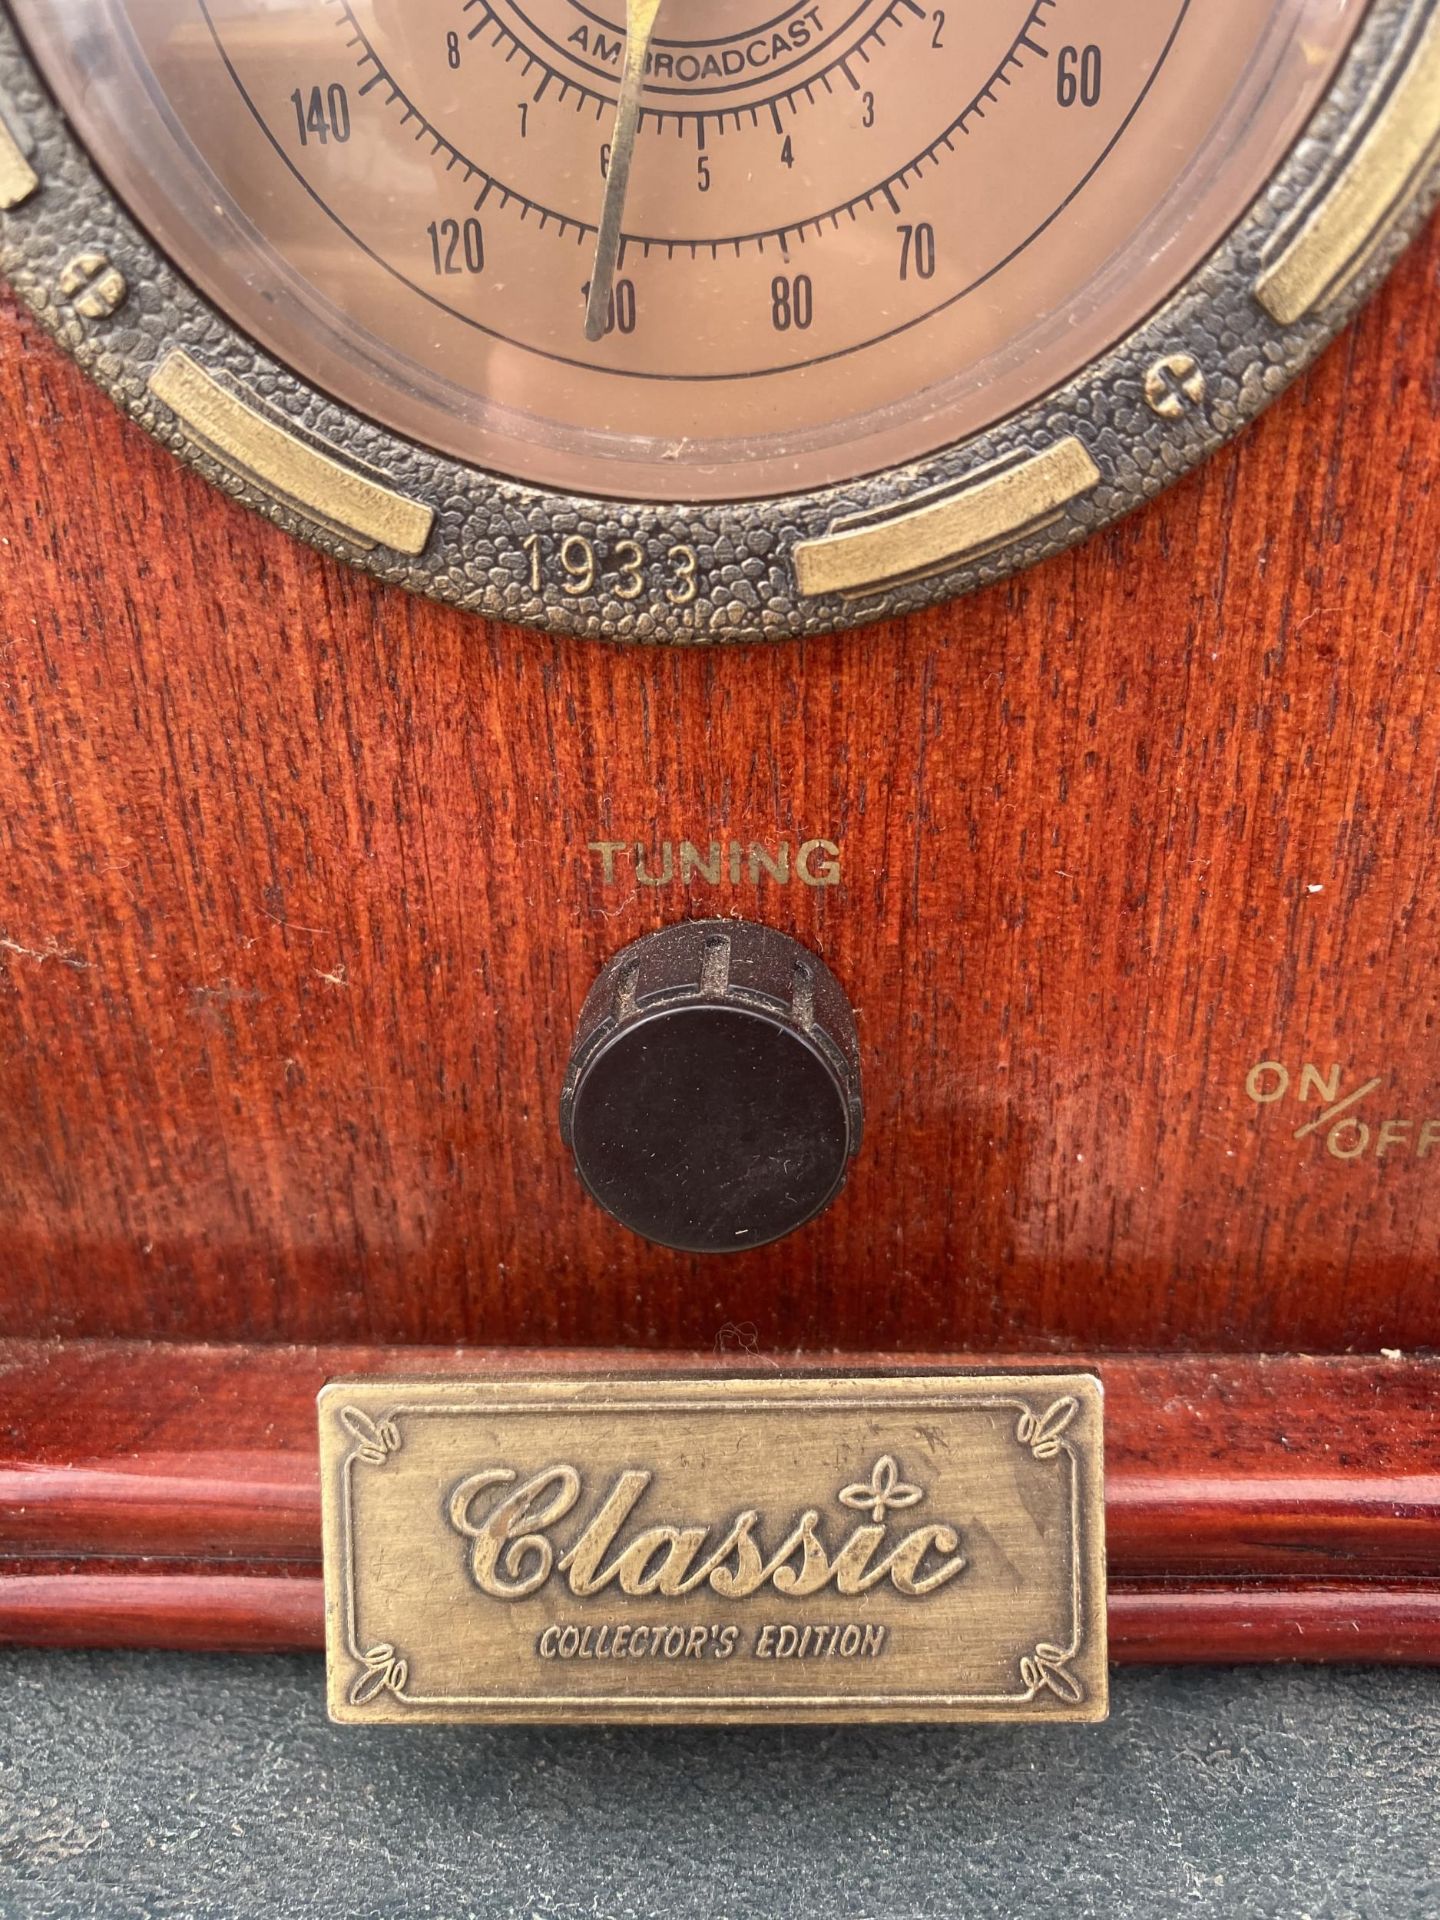 A CLASSIC COLLECTORS EDITION FM RADIO - Image 2 of 3